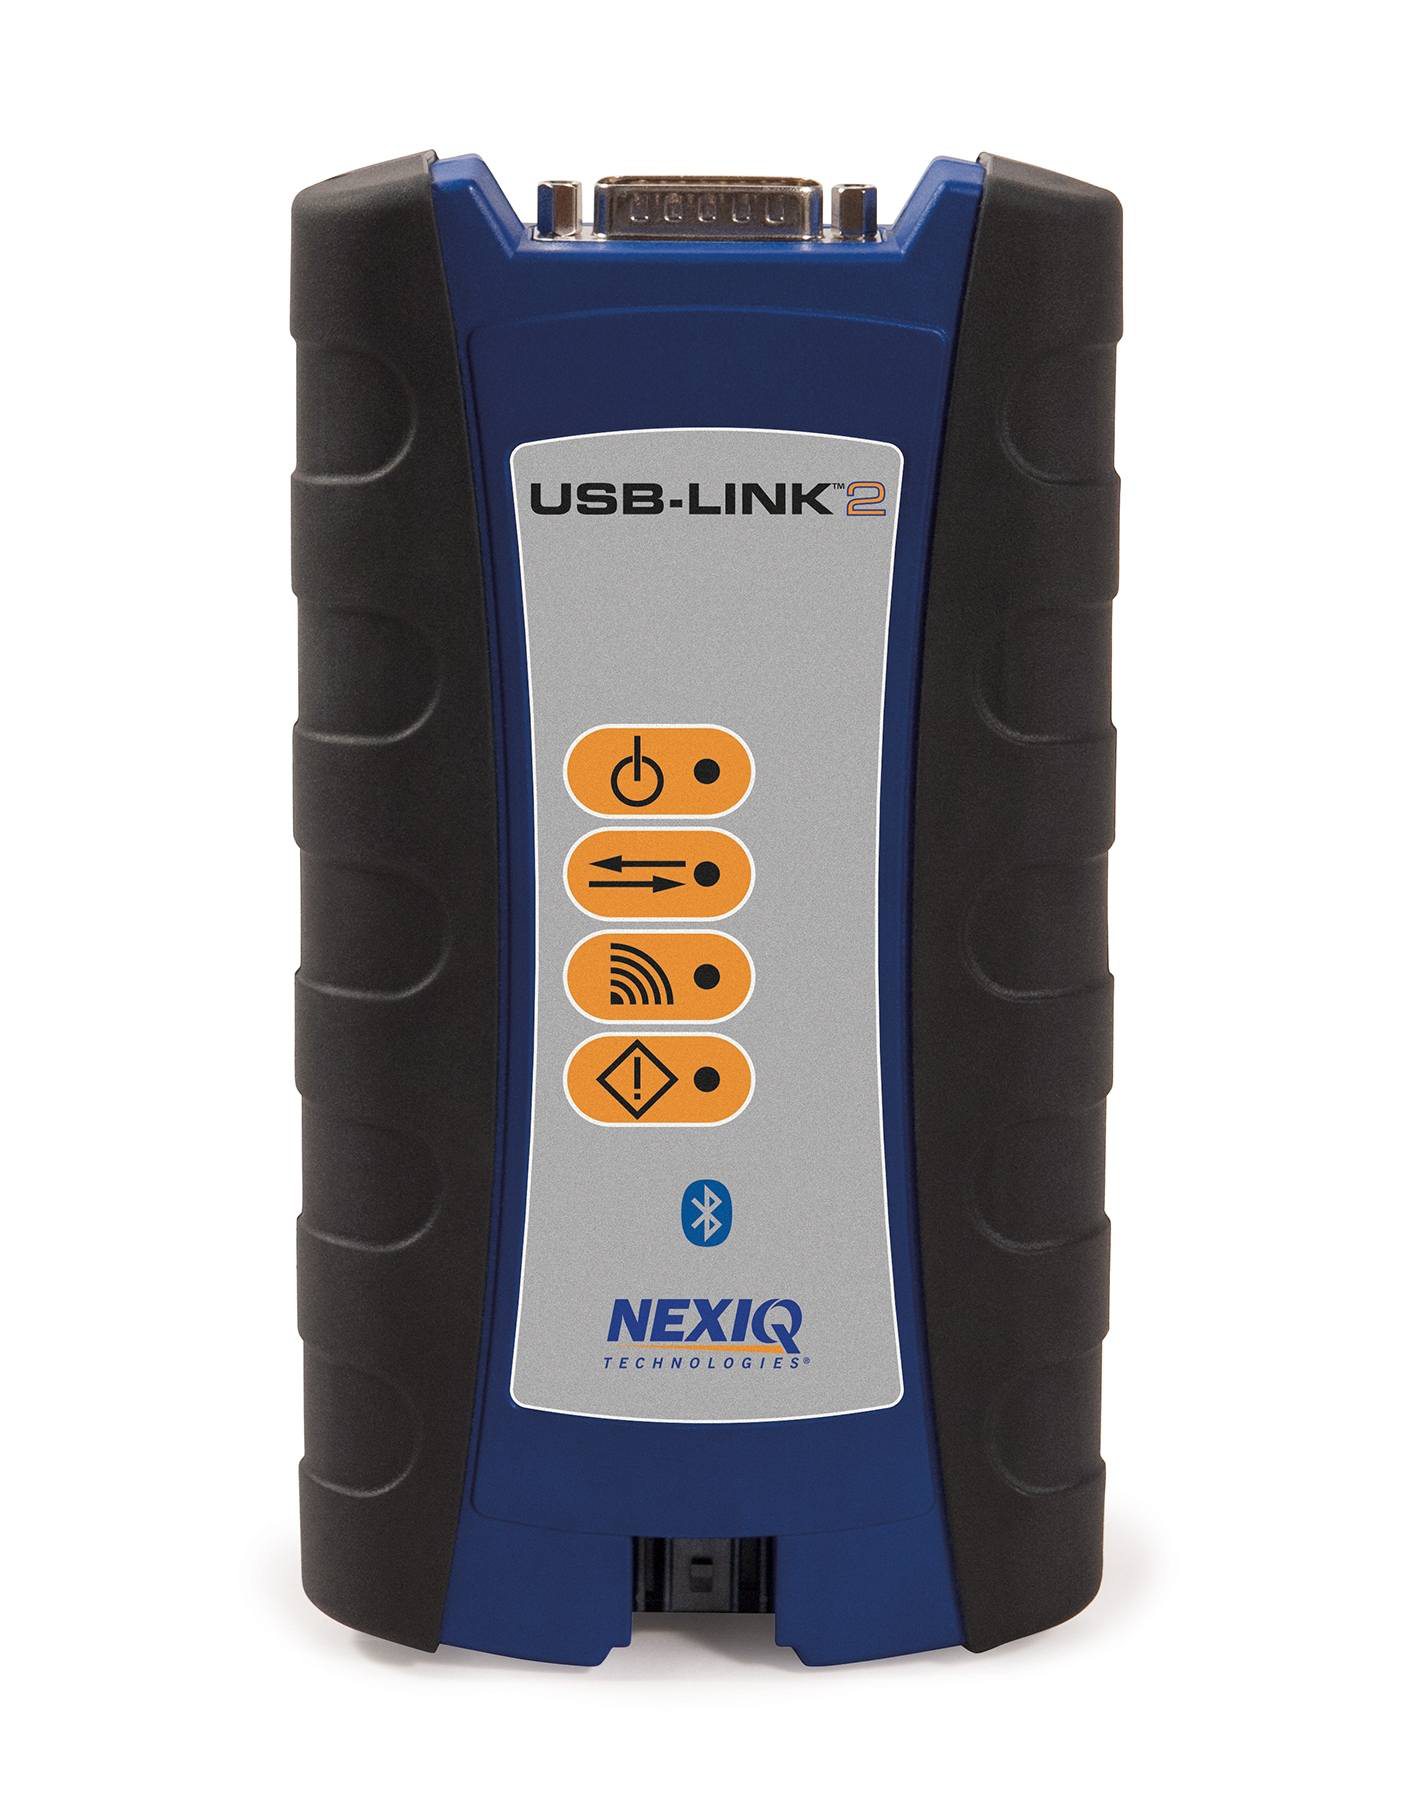 Nexiq Technologies USB-Link 2 vehicle interface